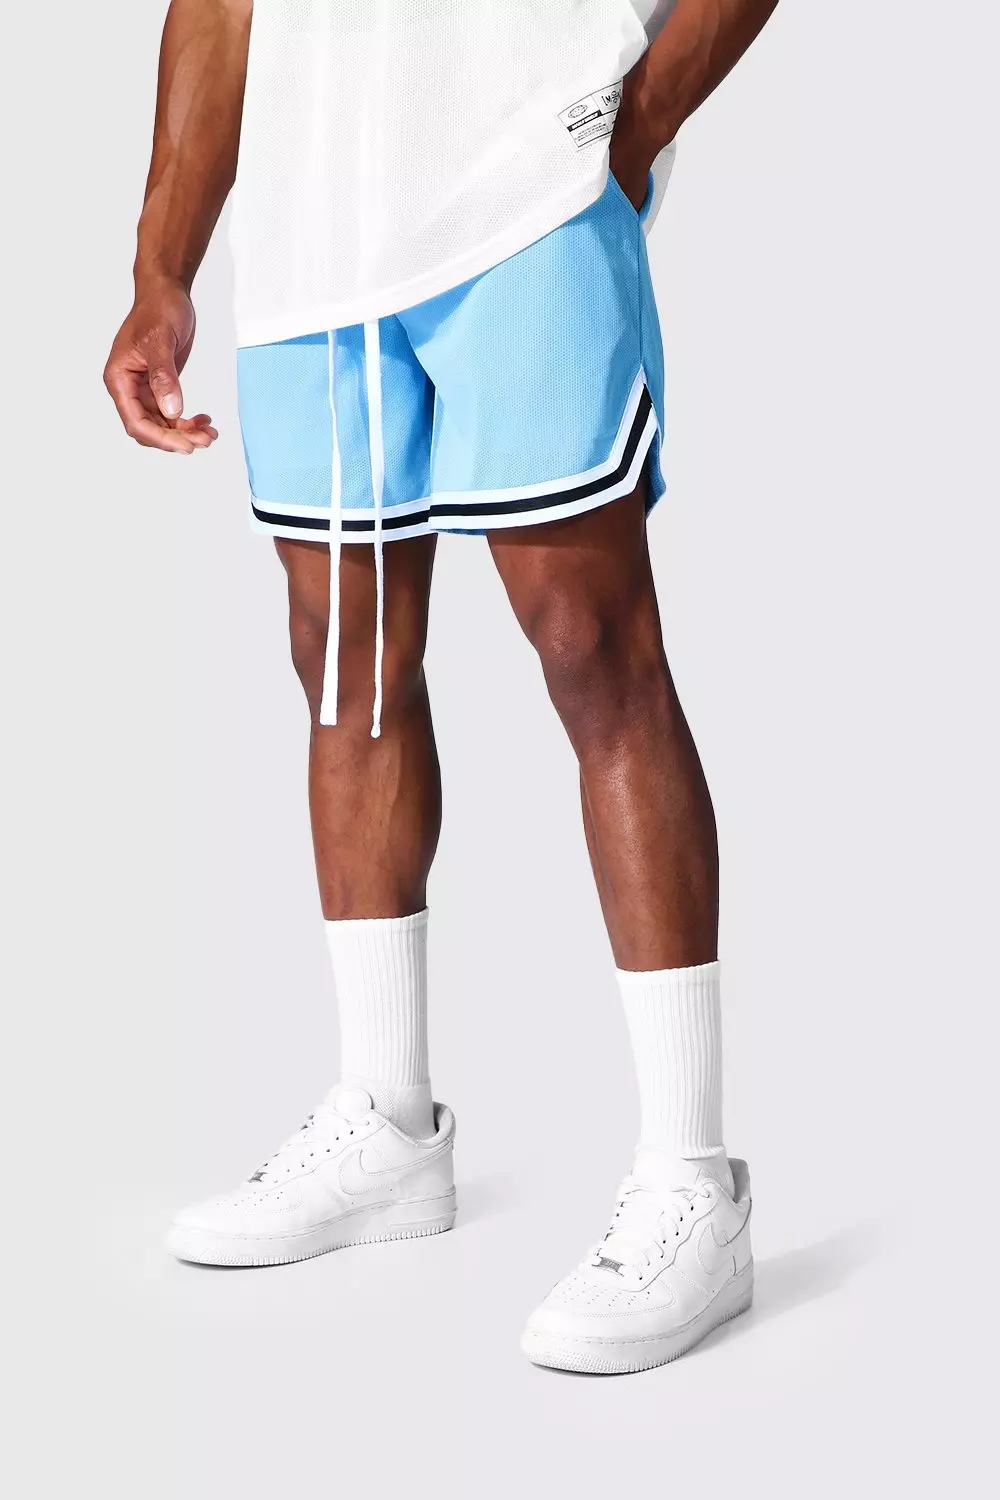 The long and short of basketball shorts